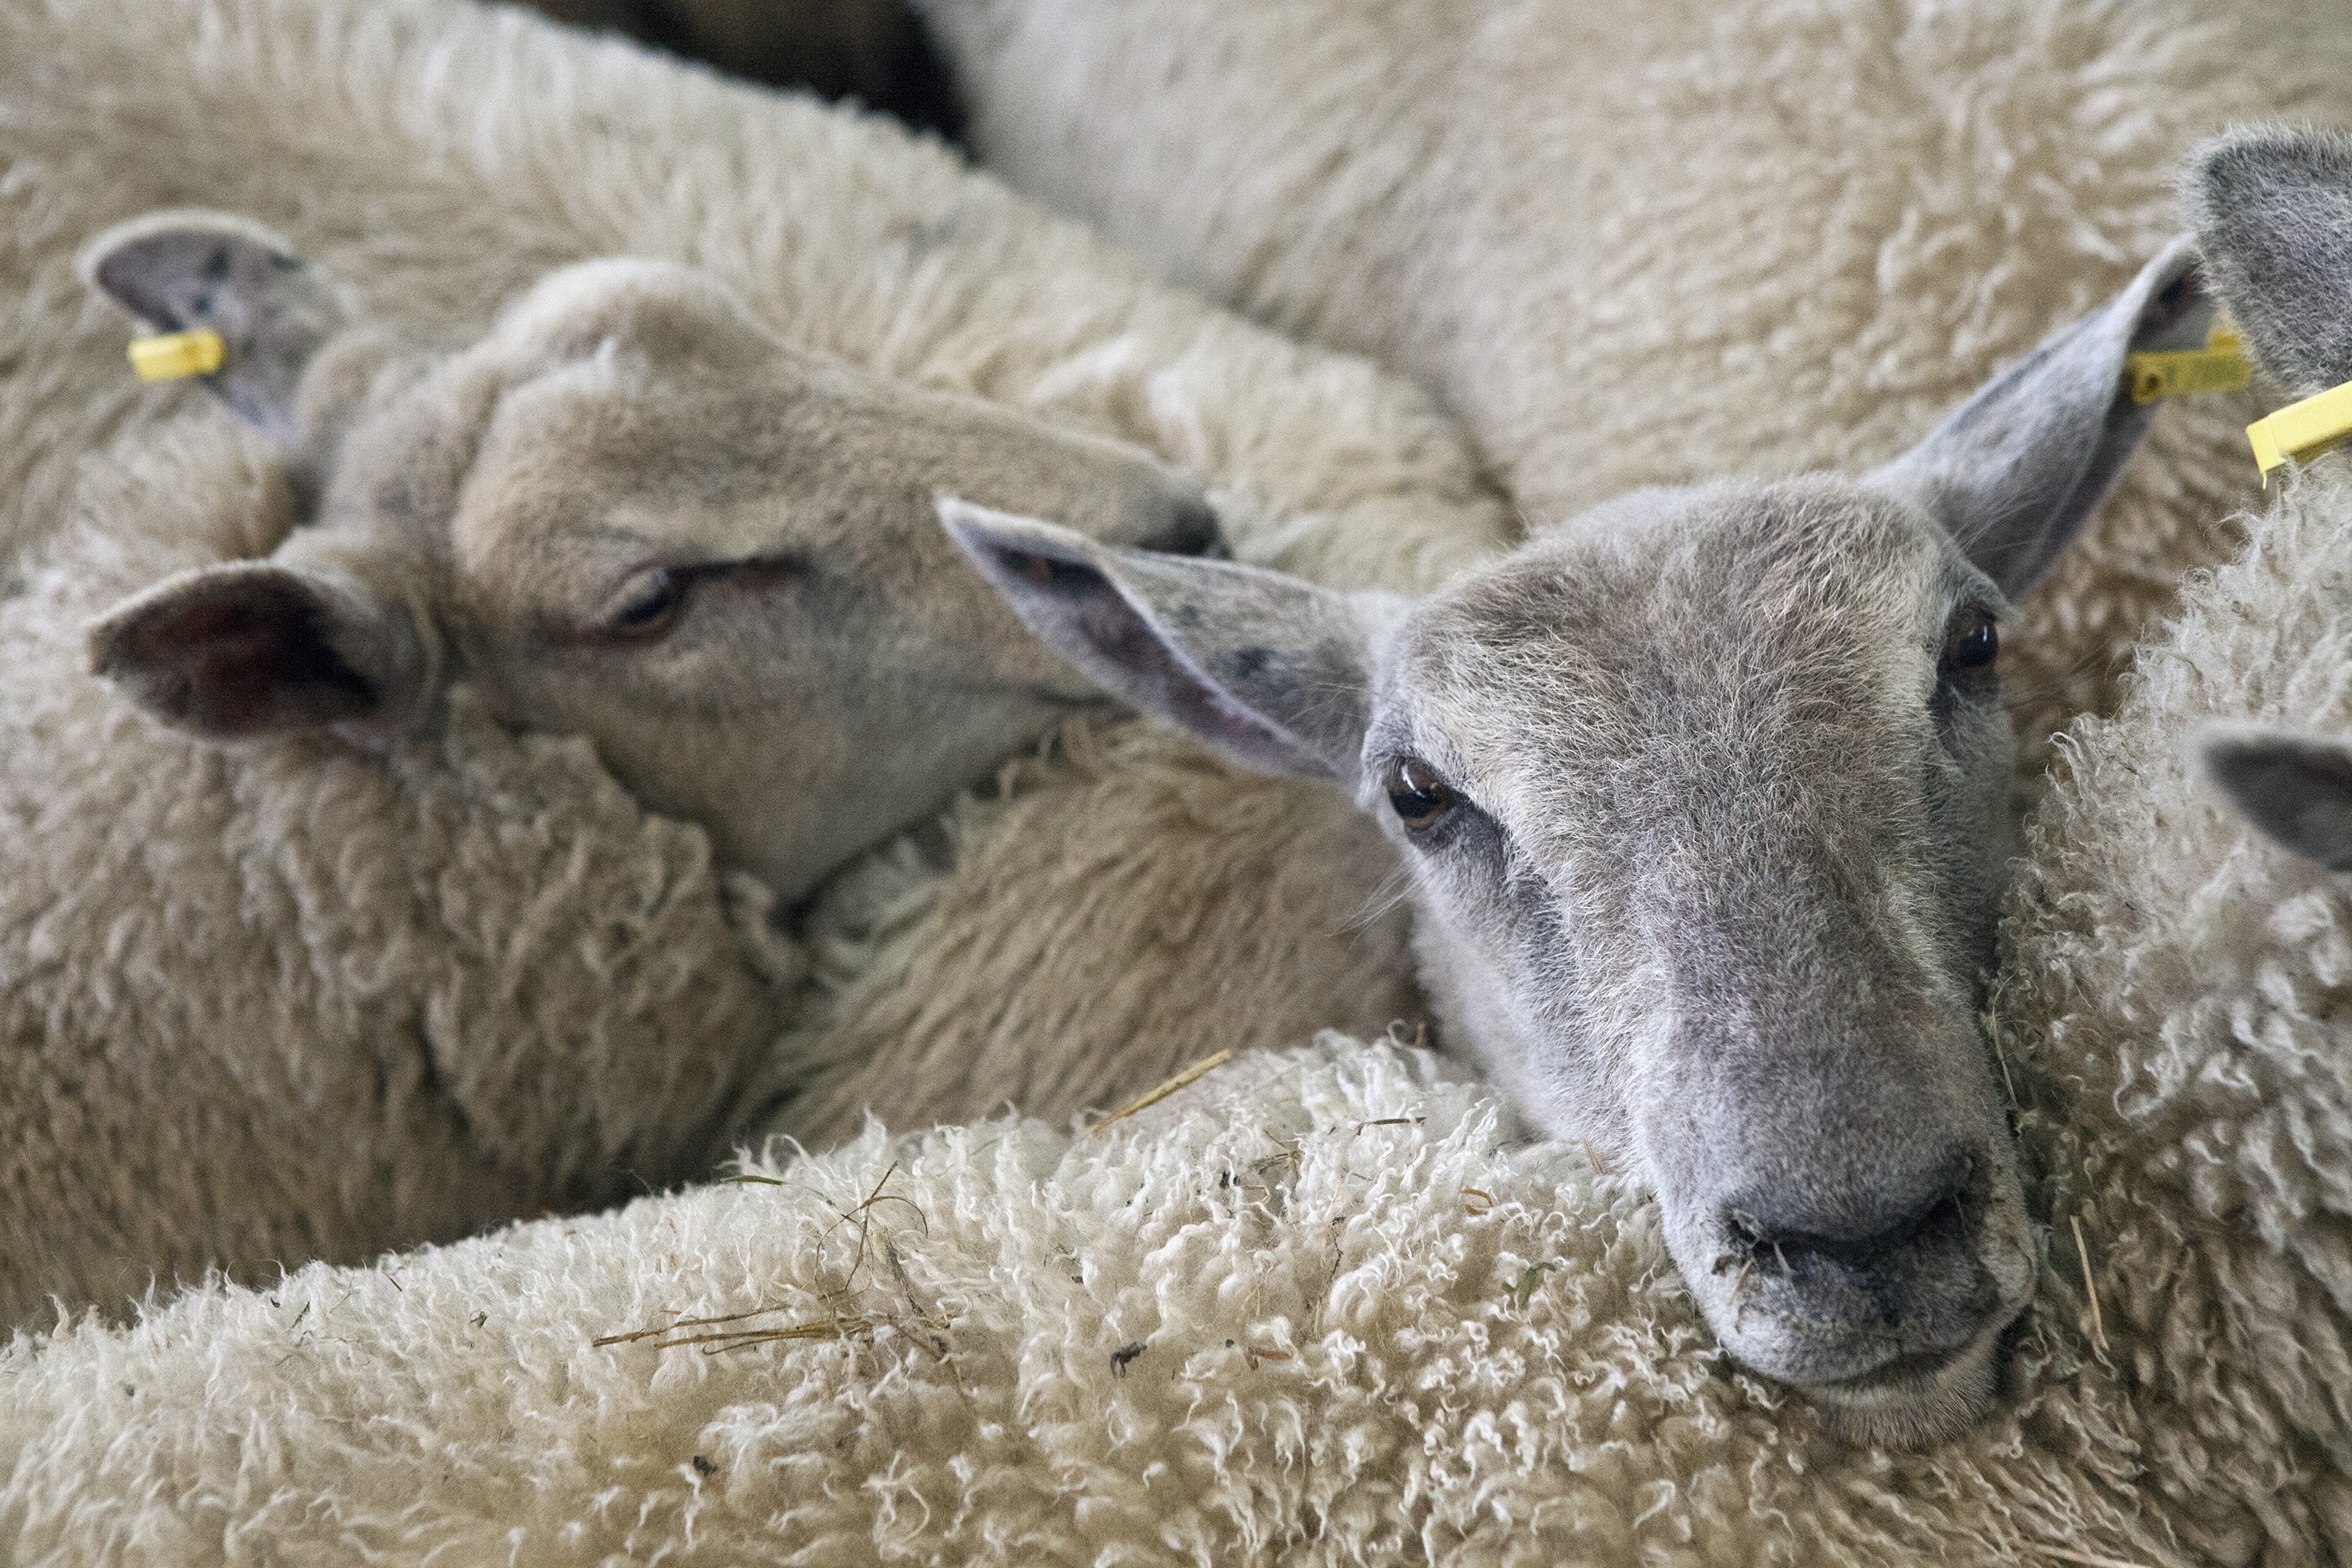 Lambs, Sheep, Farm, Agriculture, Animal, animal themes, animal body part